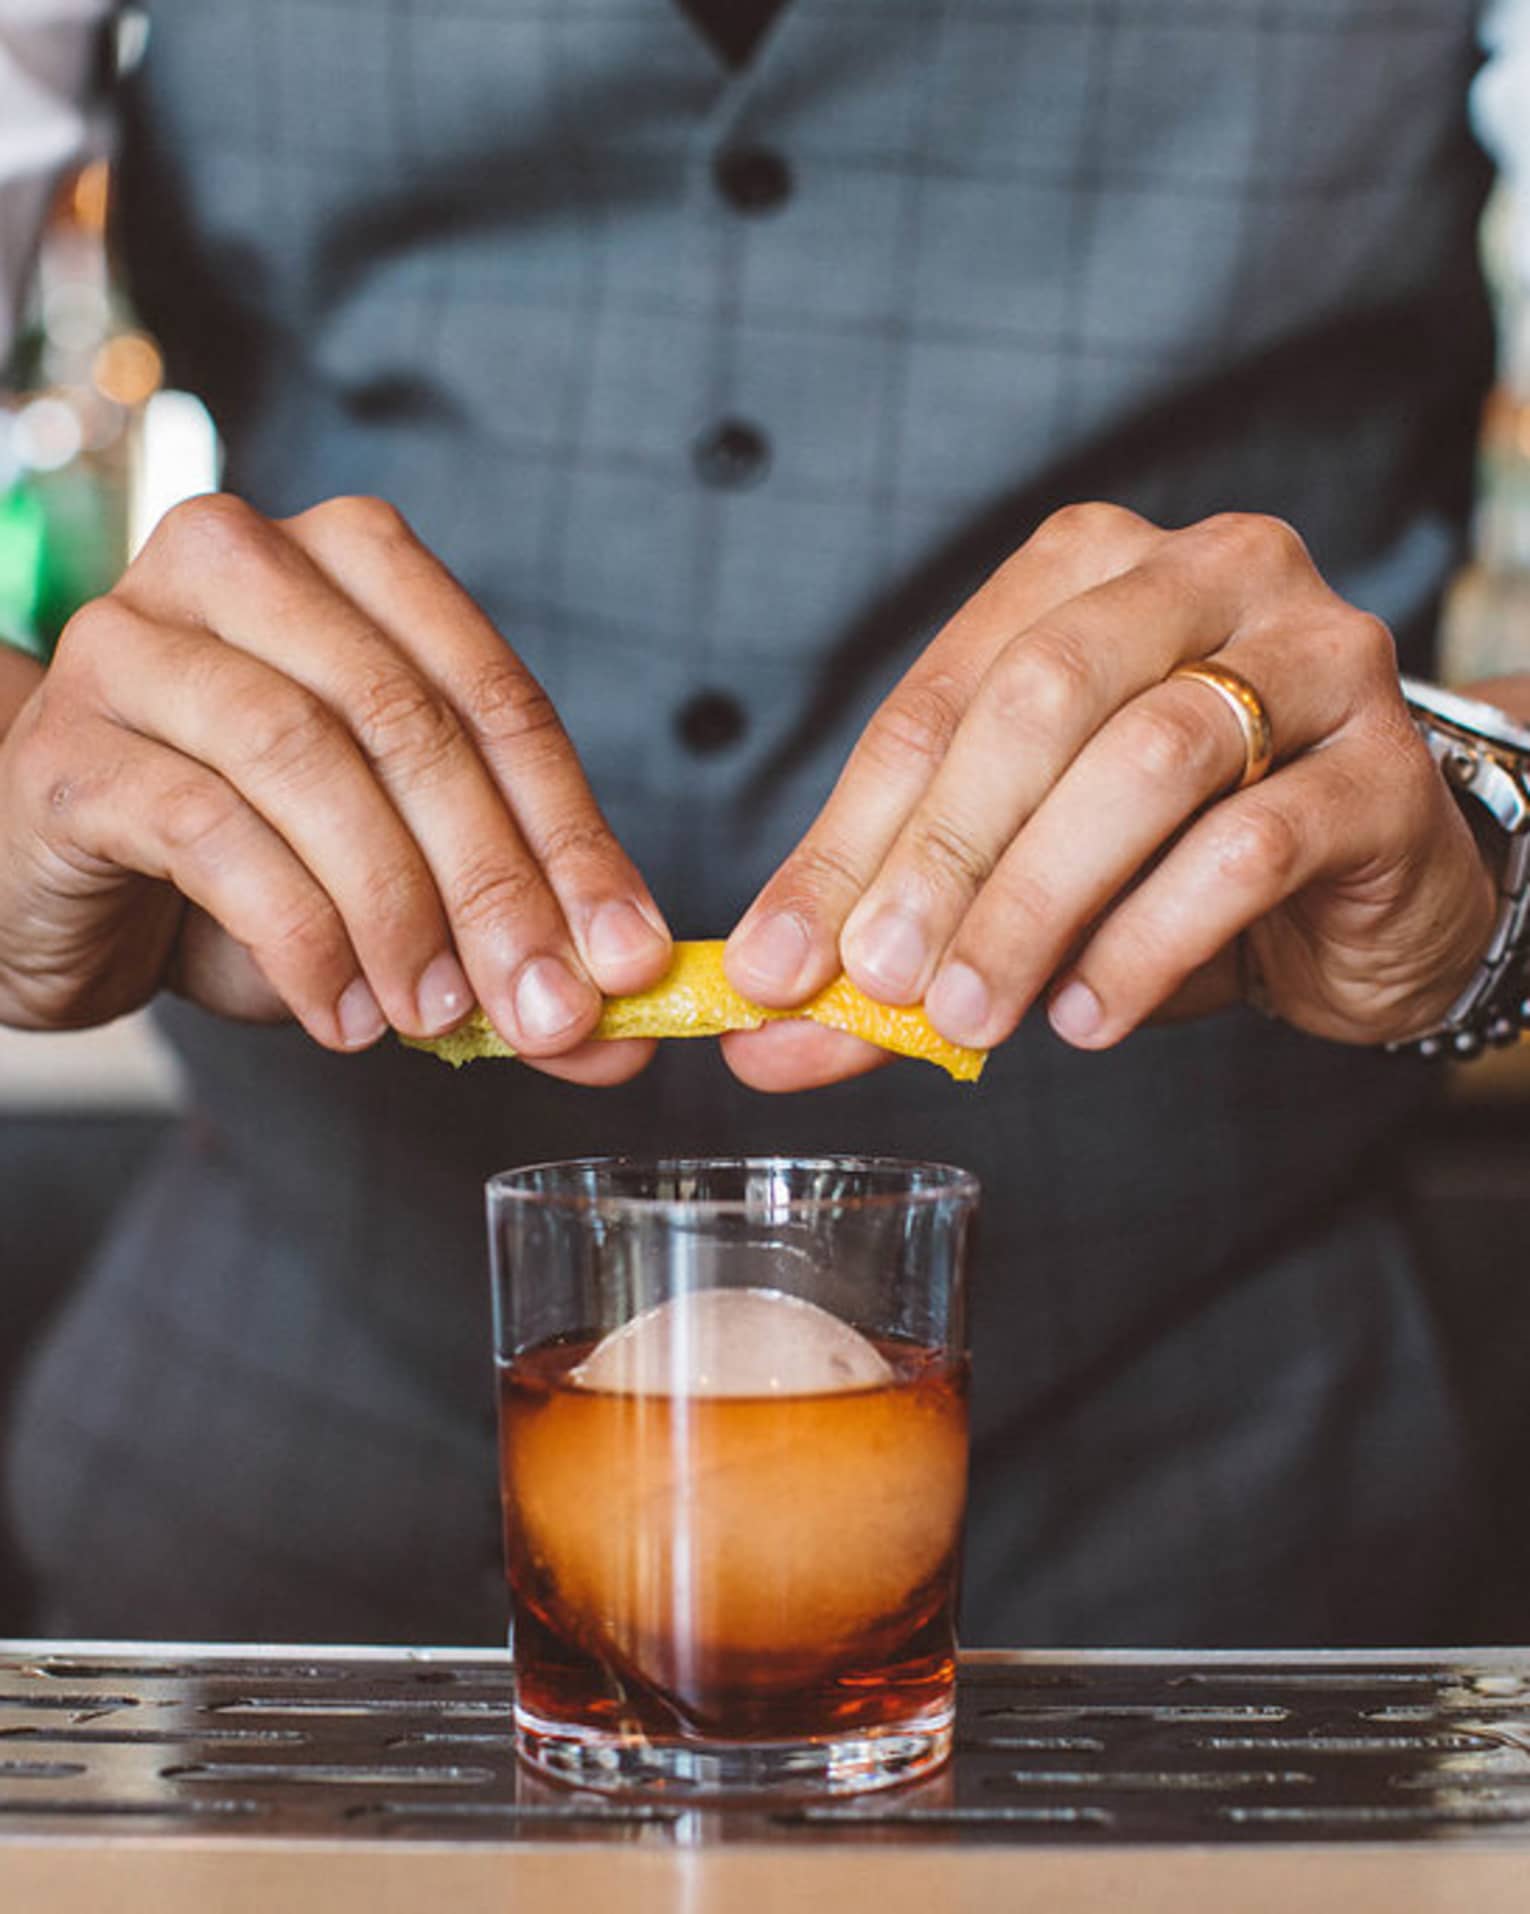 A bartender garnishing a cocktail.